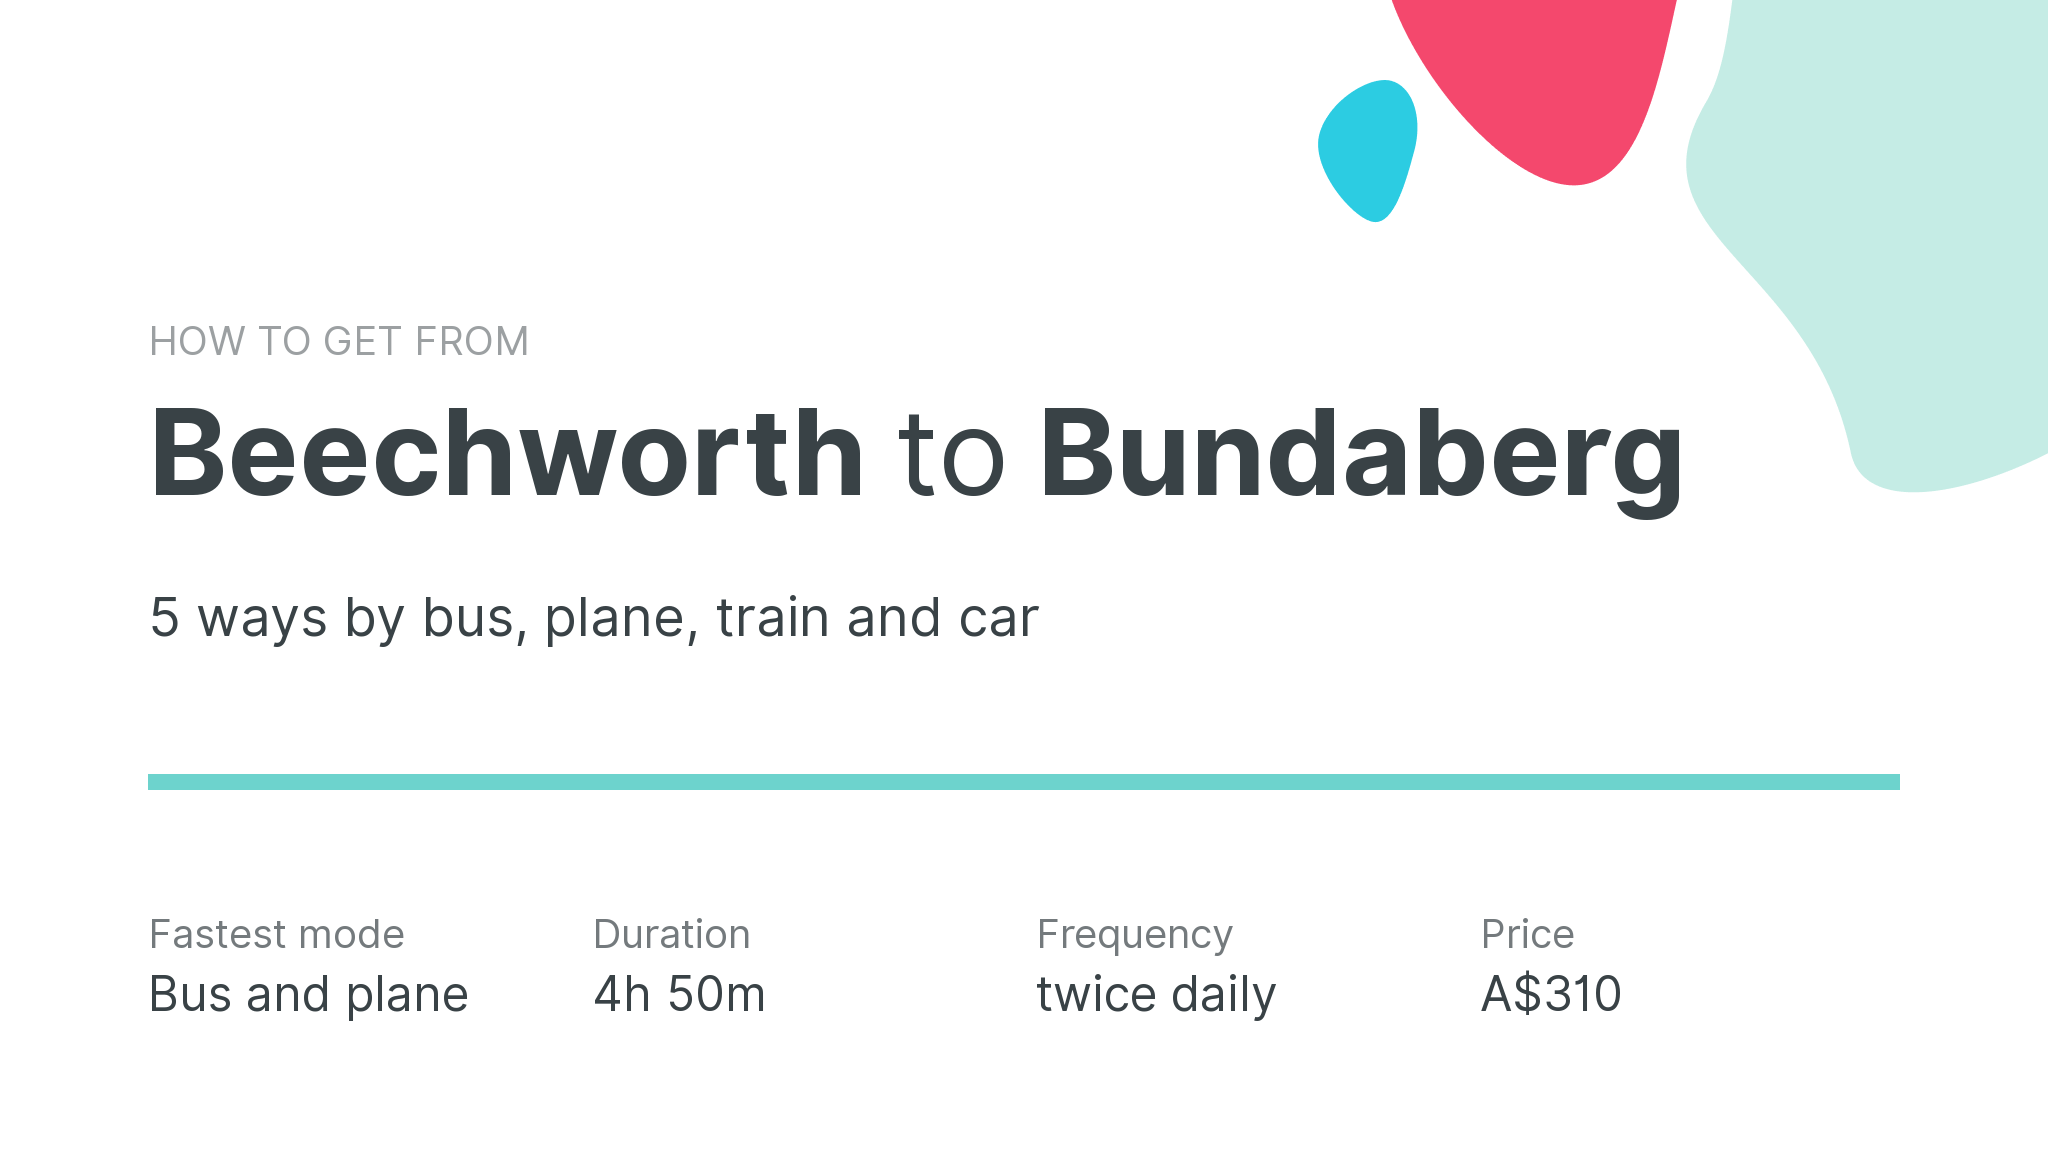 How do I get from Beechworth to Bundaberg